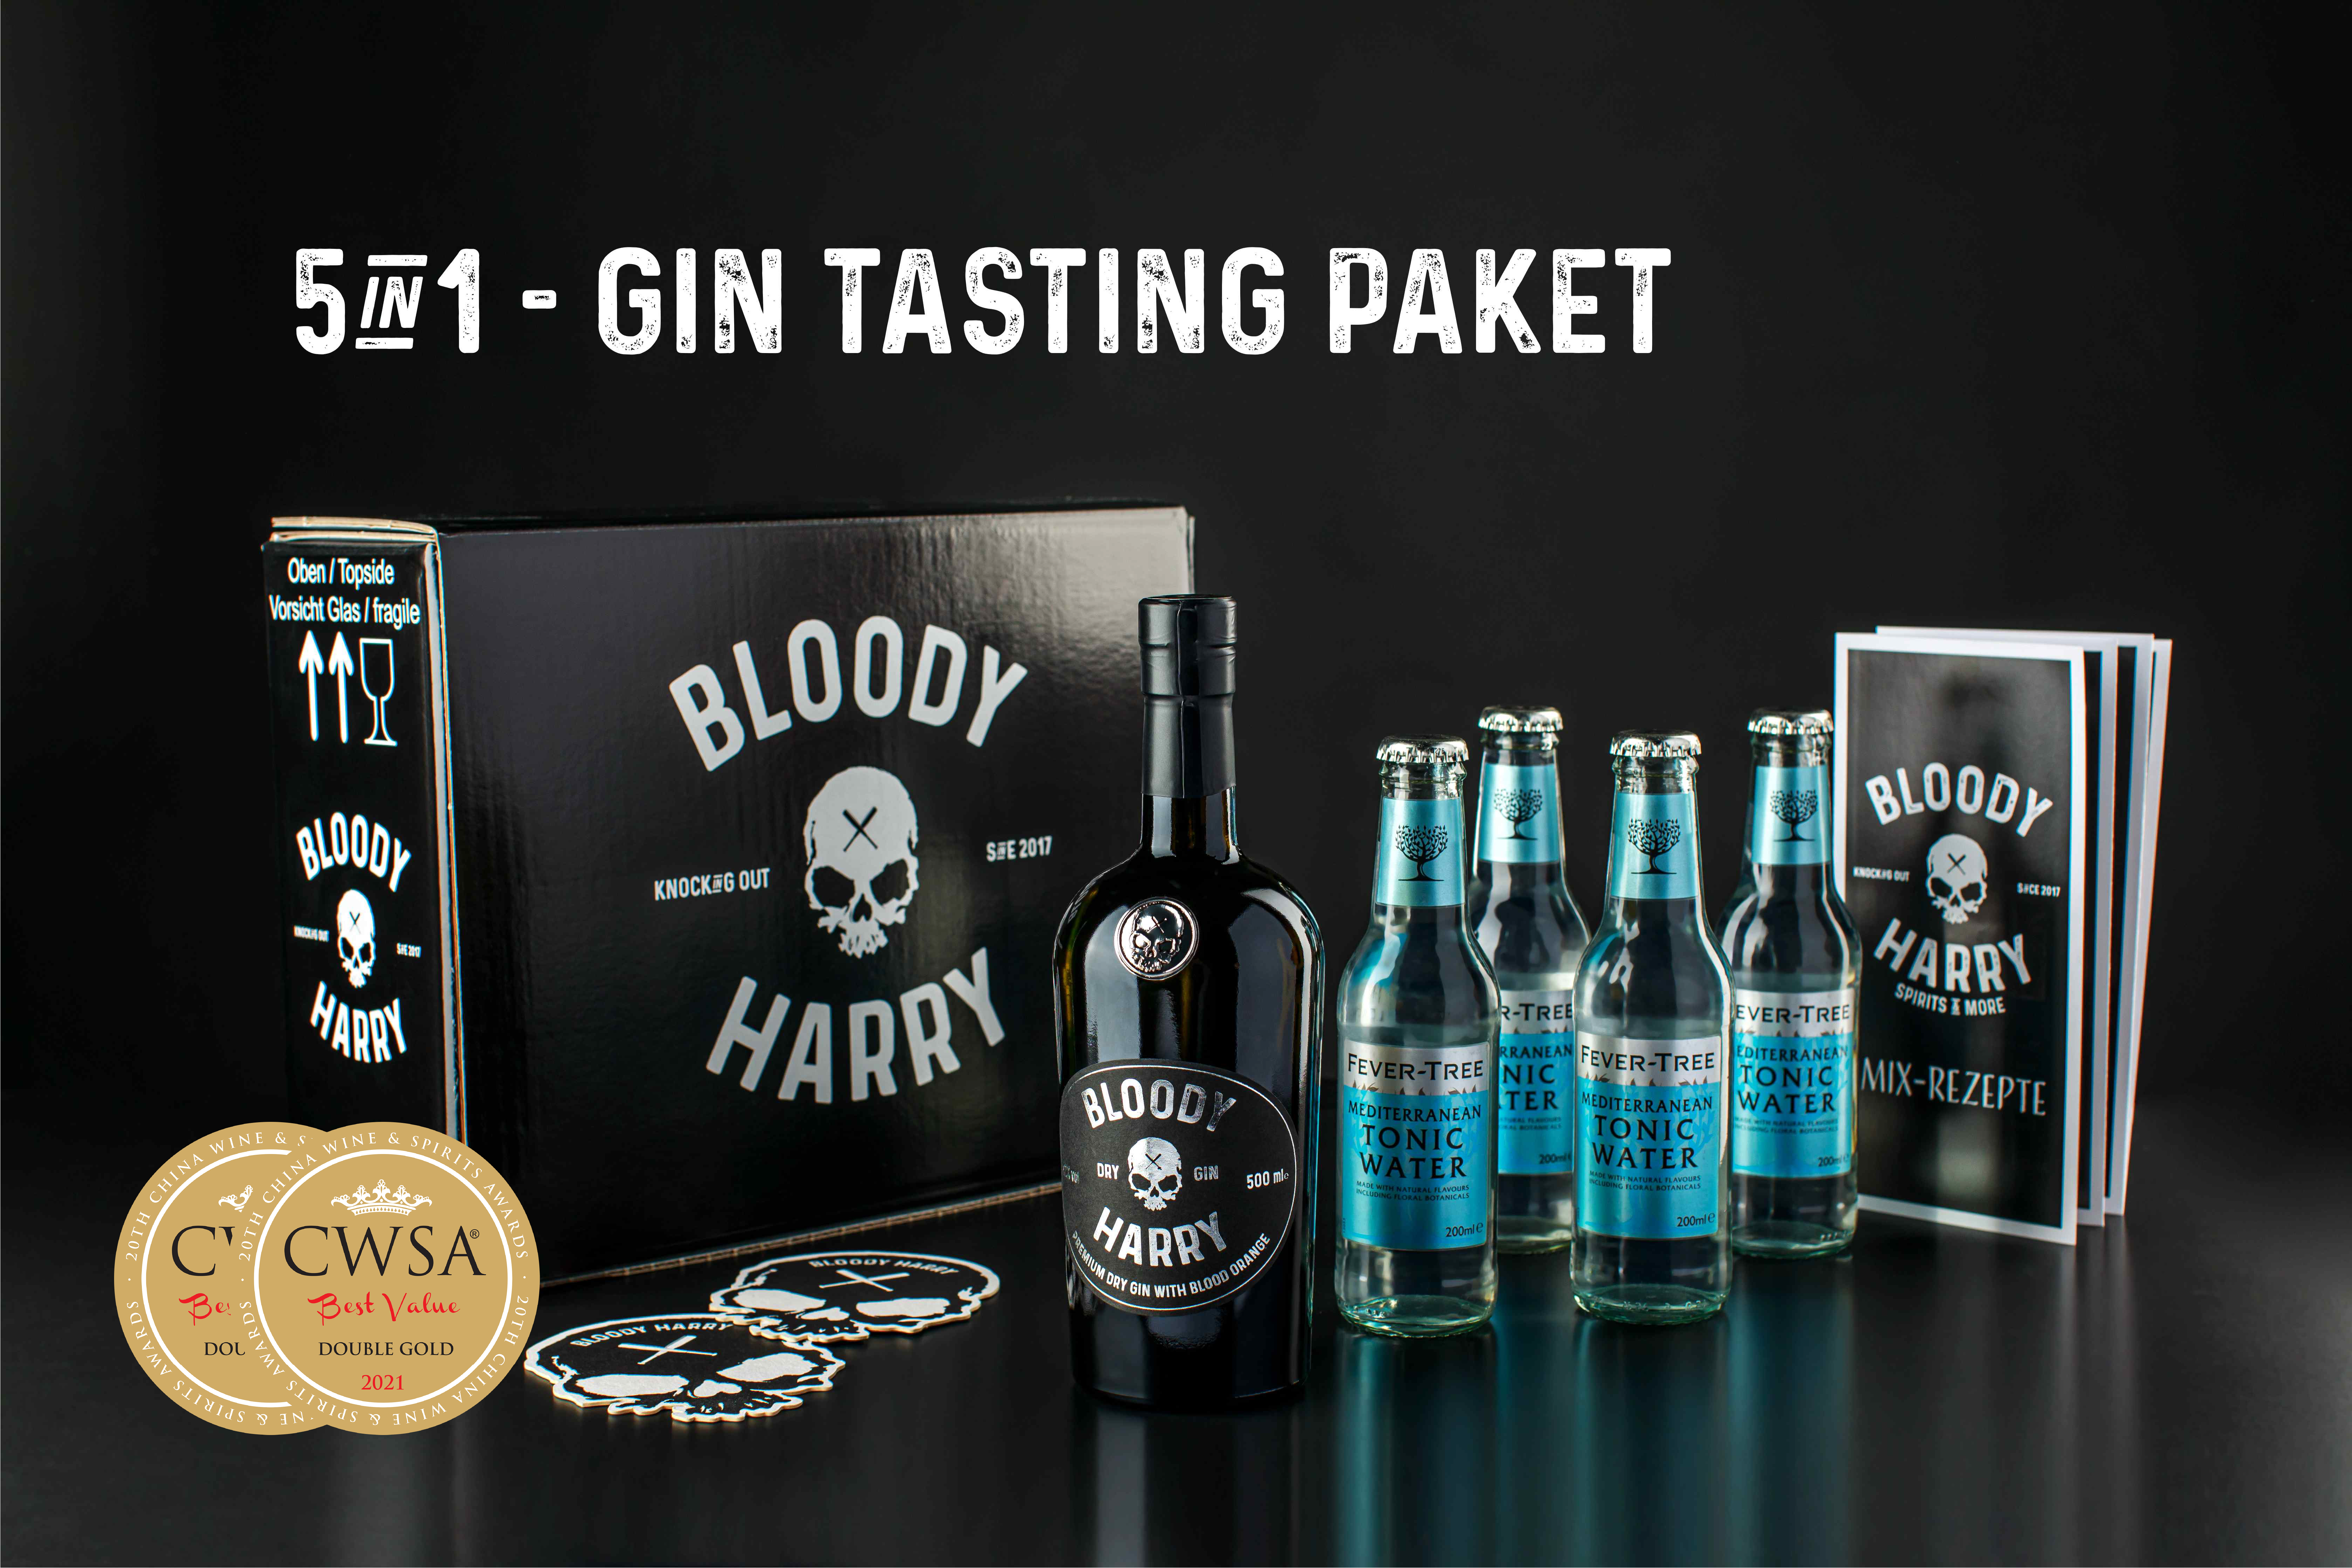 BLOODY HARRY Premium Dry Gin 5 in 1 Tasting Paket